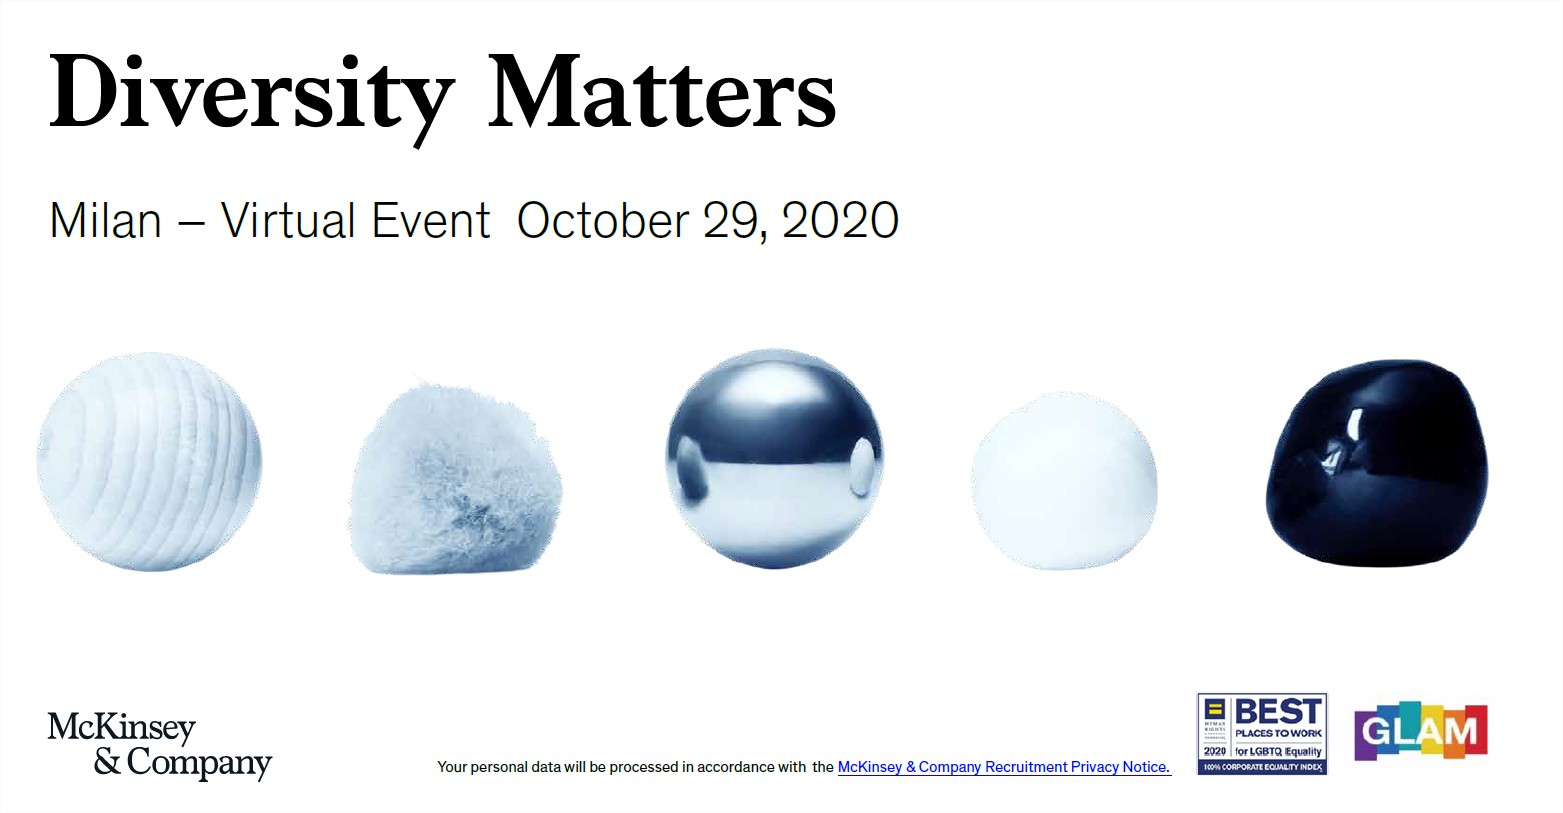 Flyer Diversity Matters 29.10.20 con Glam e Best